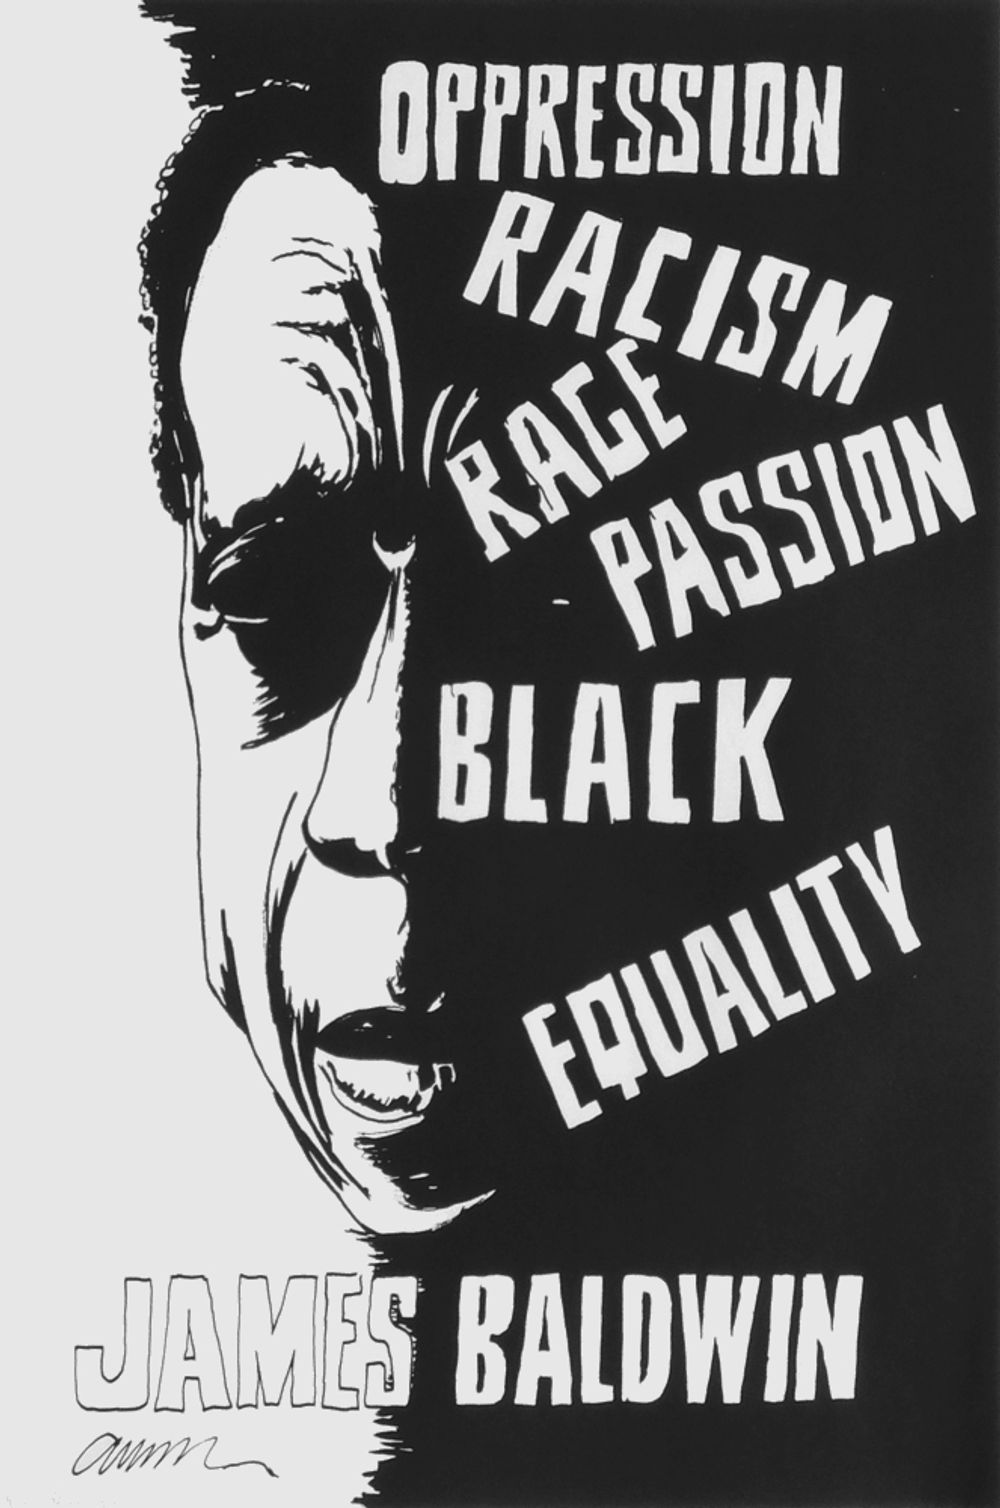 James Baldwin - Black power